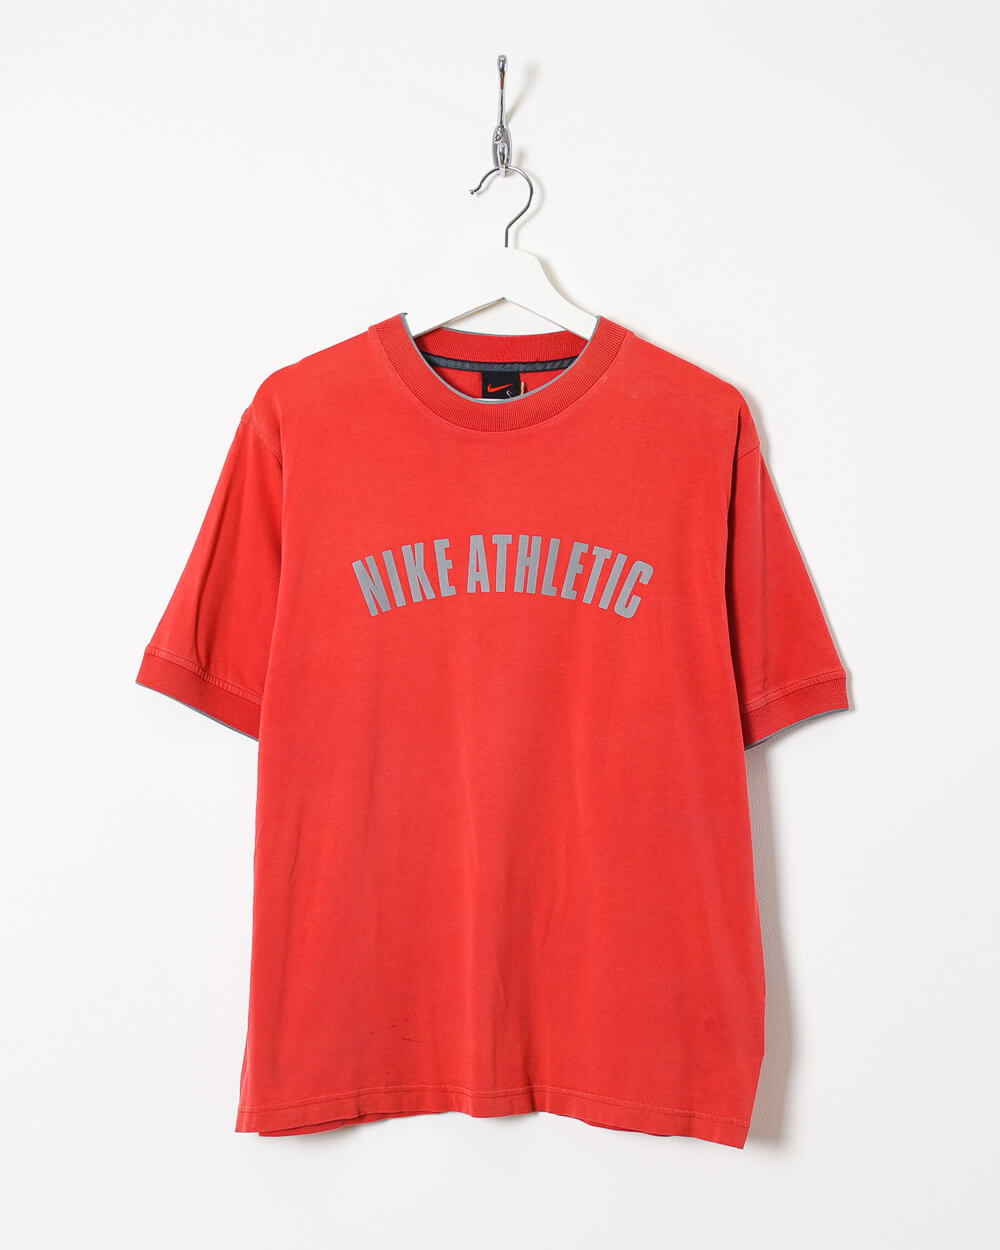 Nike Athletic T-Shirt - Medium - Domno Vintage 90s, 80s, 00s Retro and Vintage Clothing 